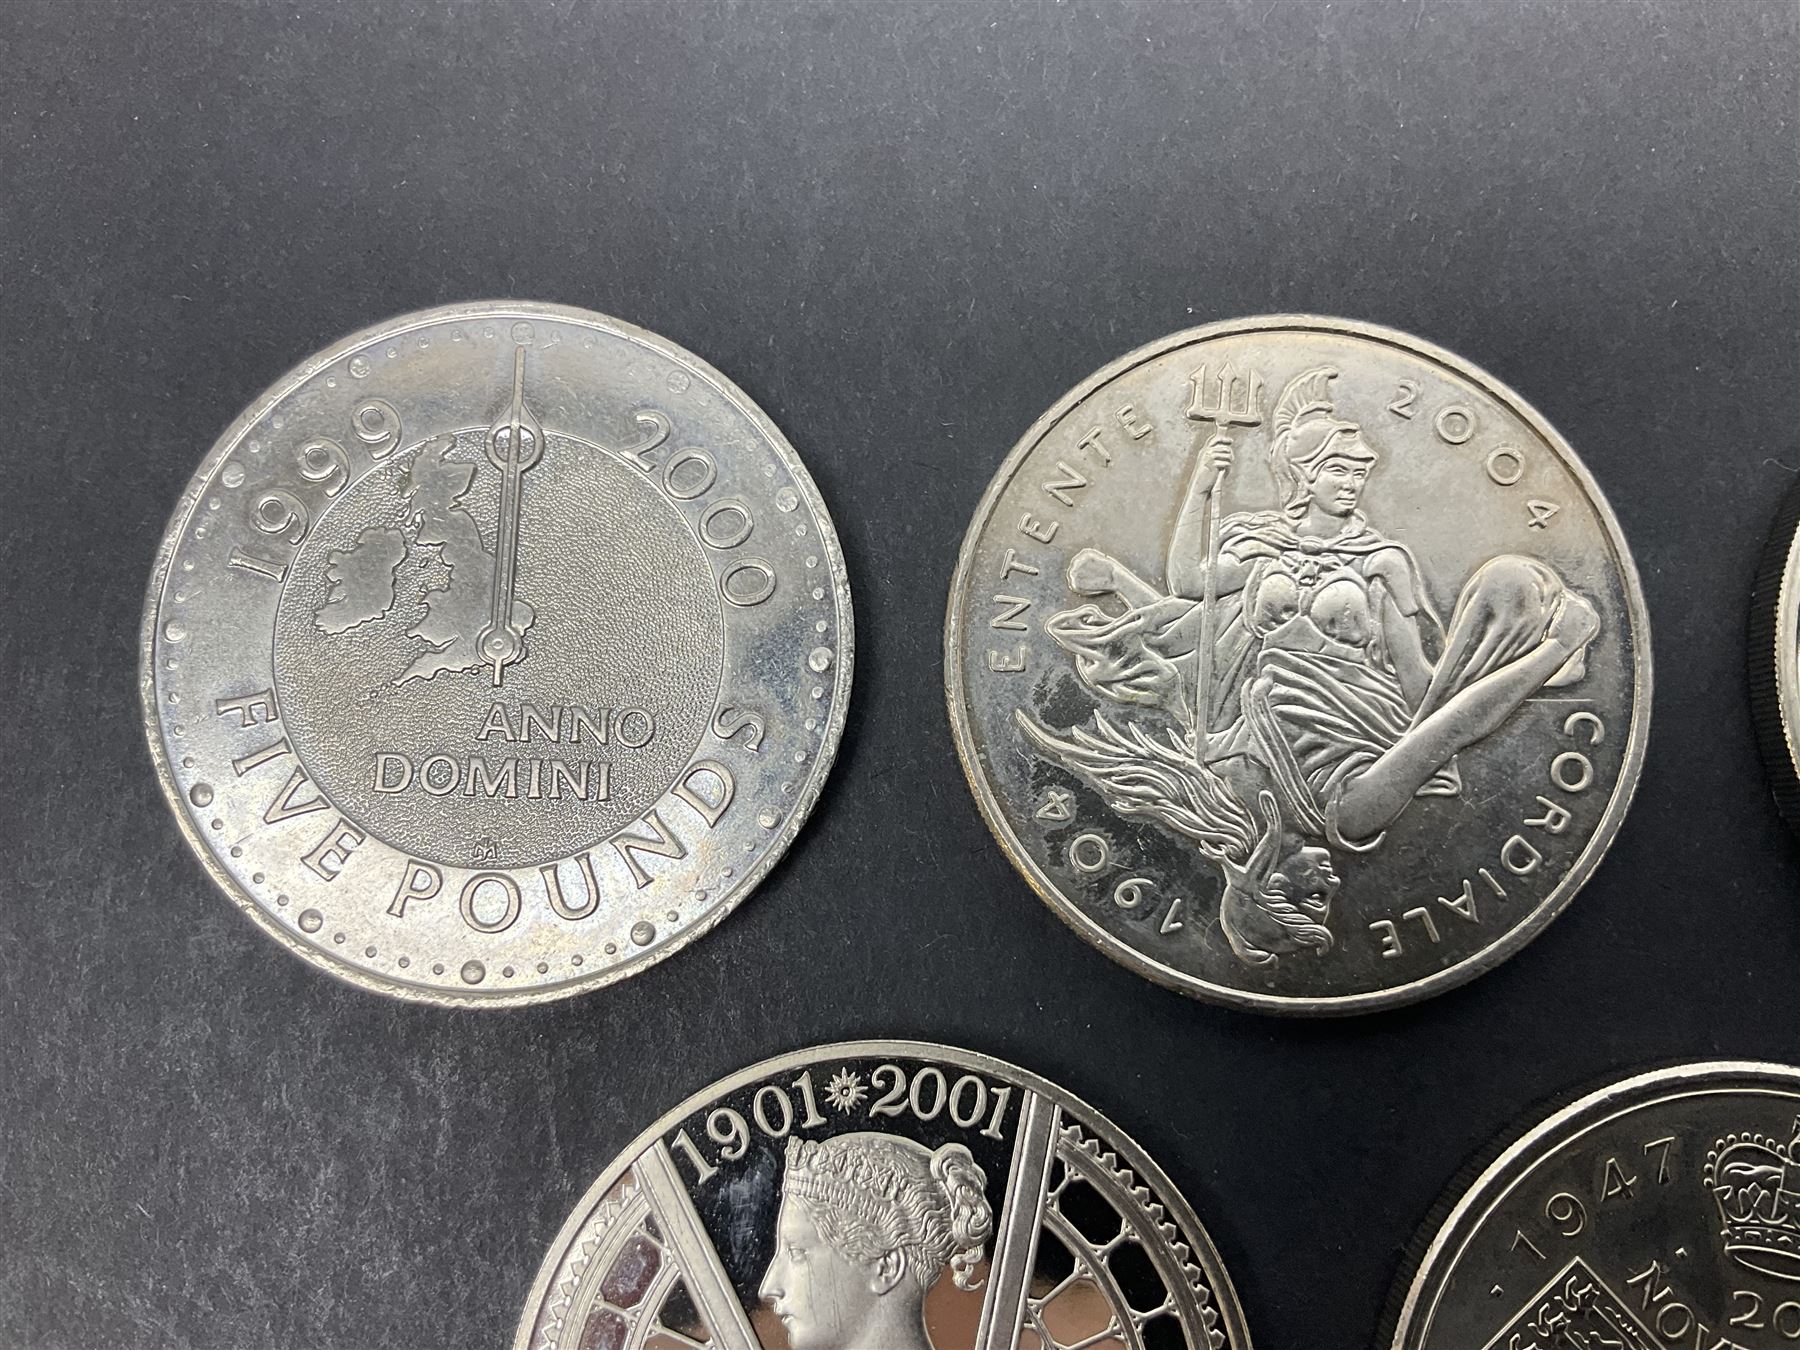 Five Queen Elizabeth II United Kingdom five pound coins - Image 2 of 5